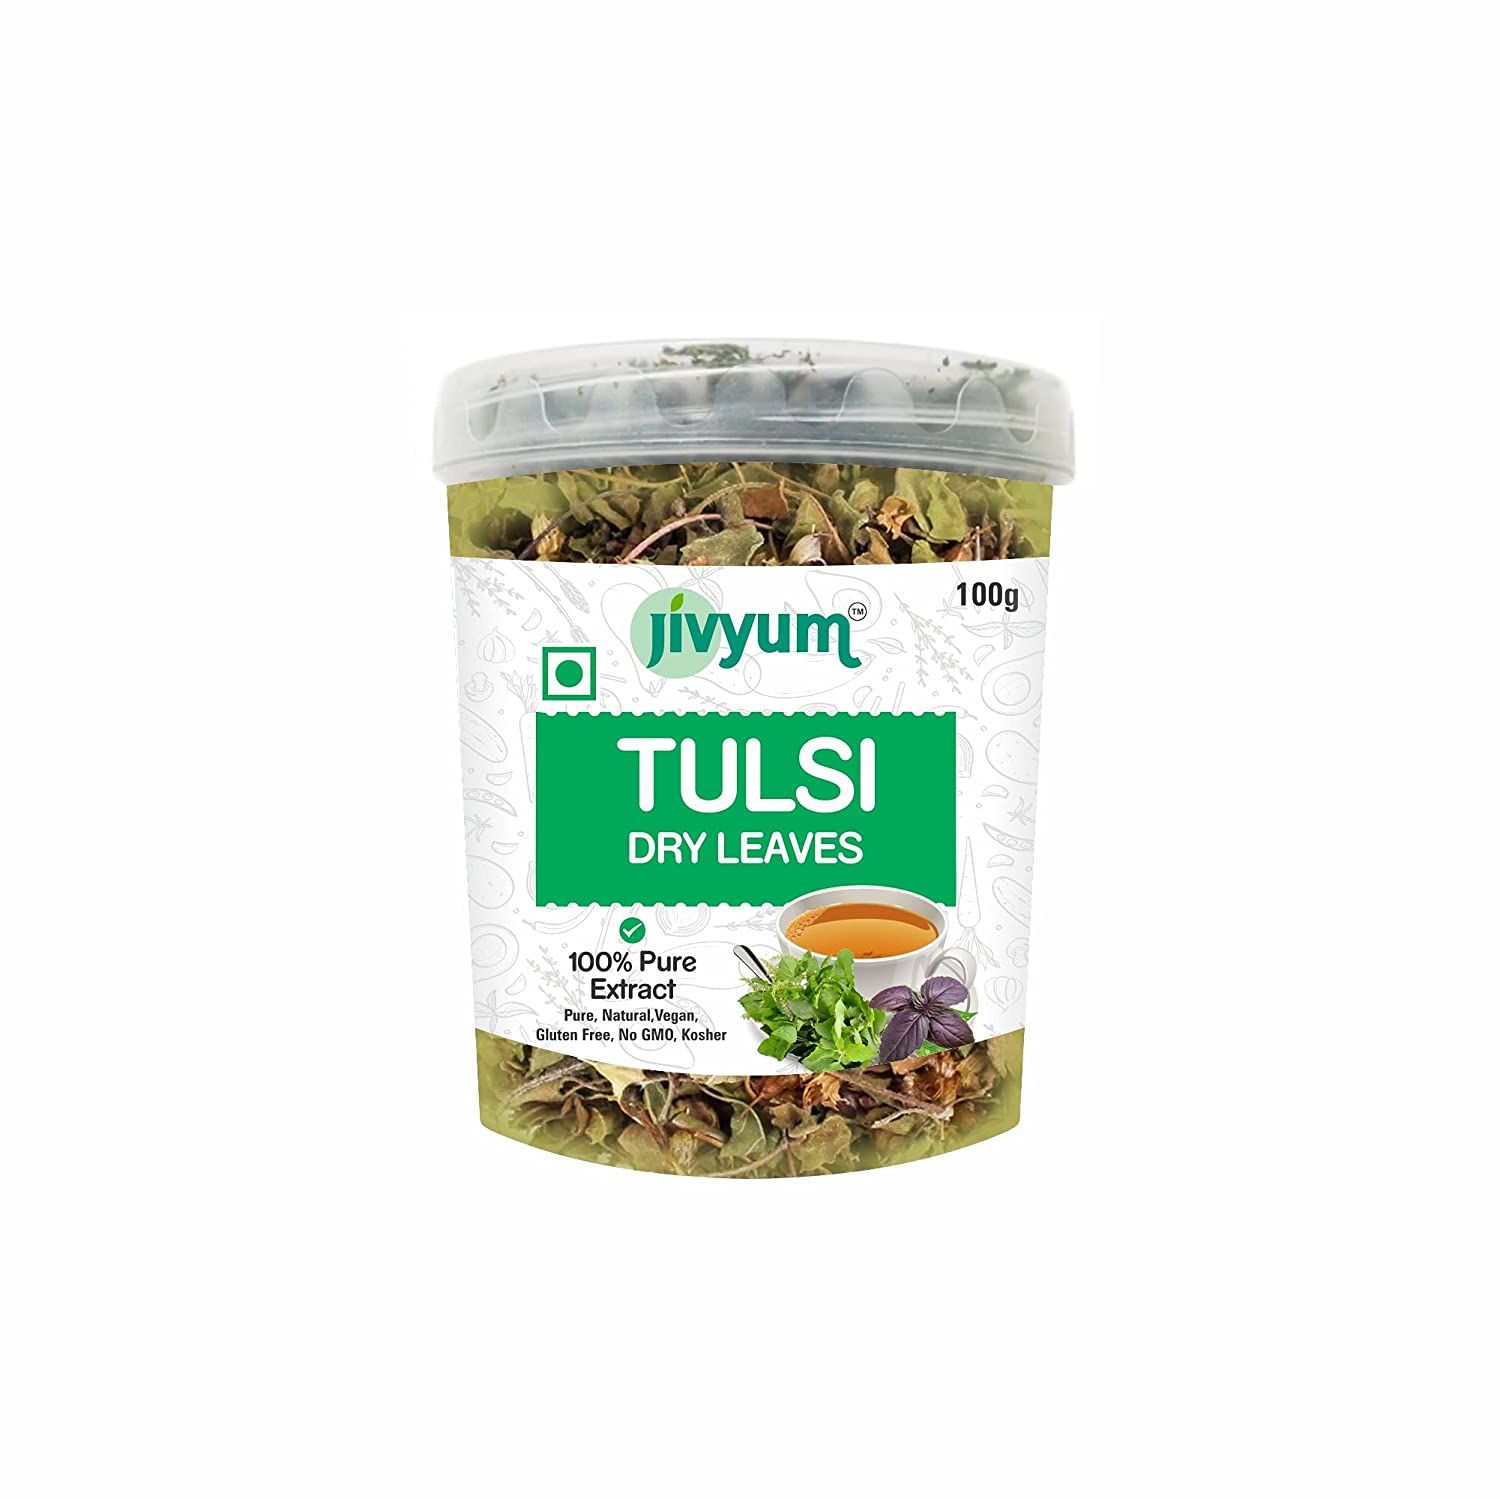 Jivyum Natural Tulsi Dry Leaf Image